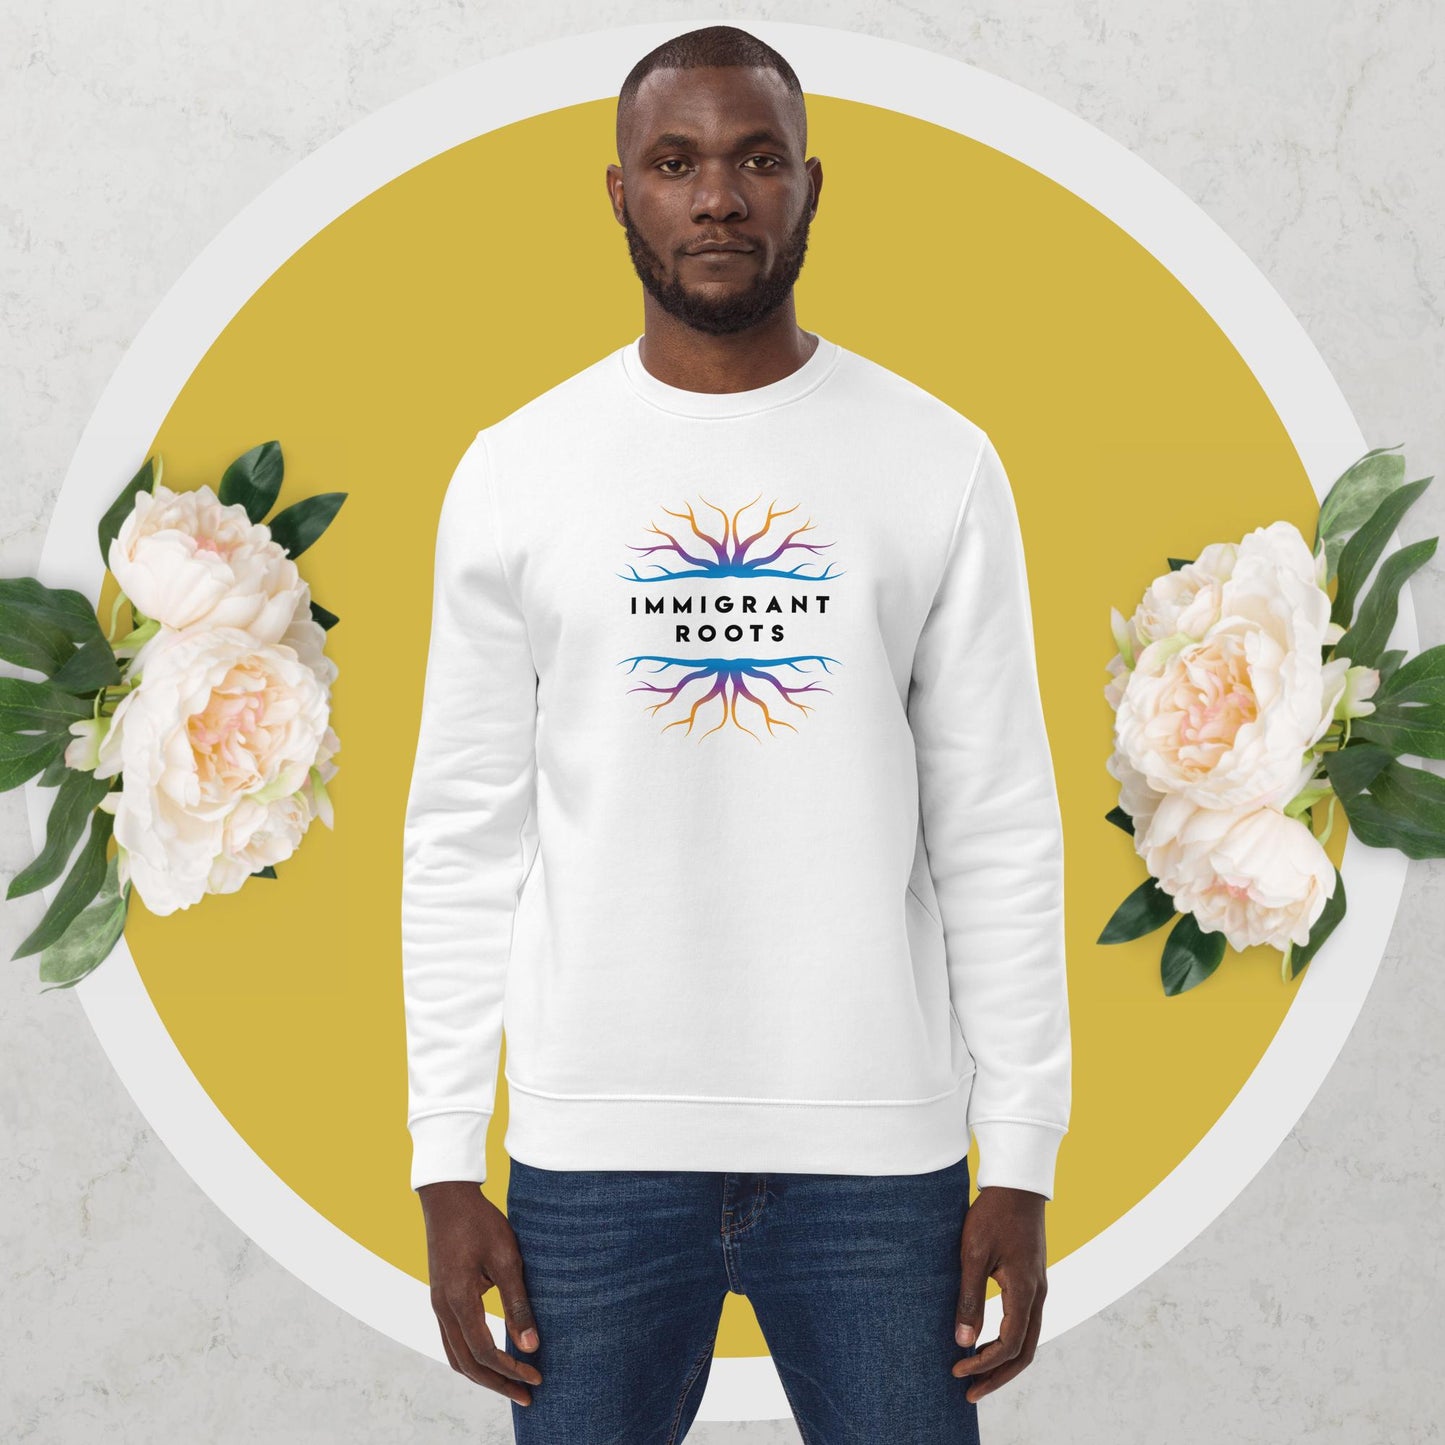 Urban 'Immigrant Roots' Organic Cotton Sweatshirt - Eco Sweatshirt